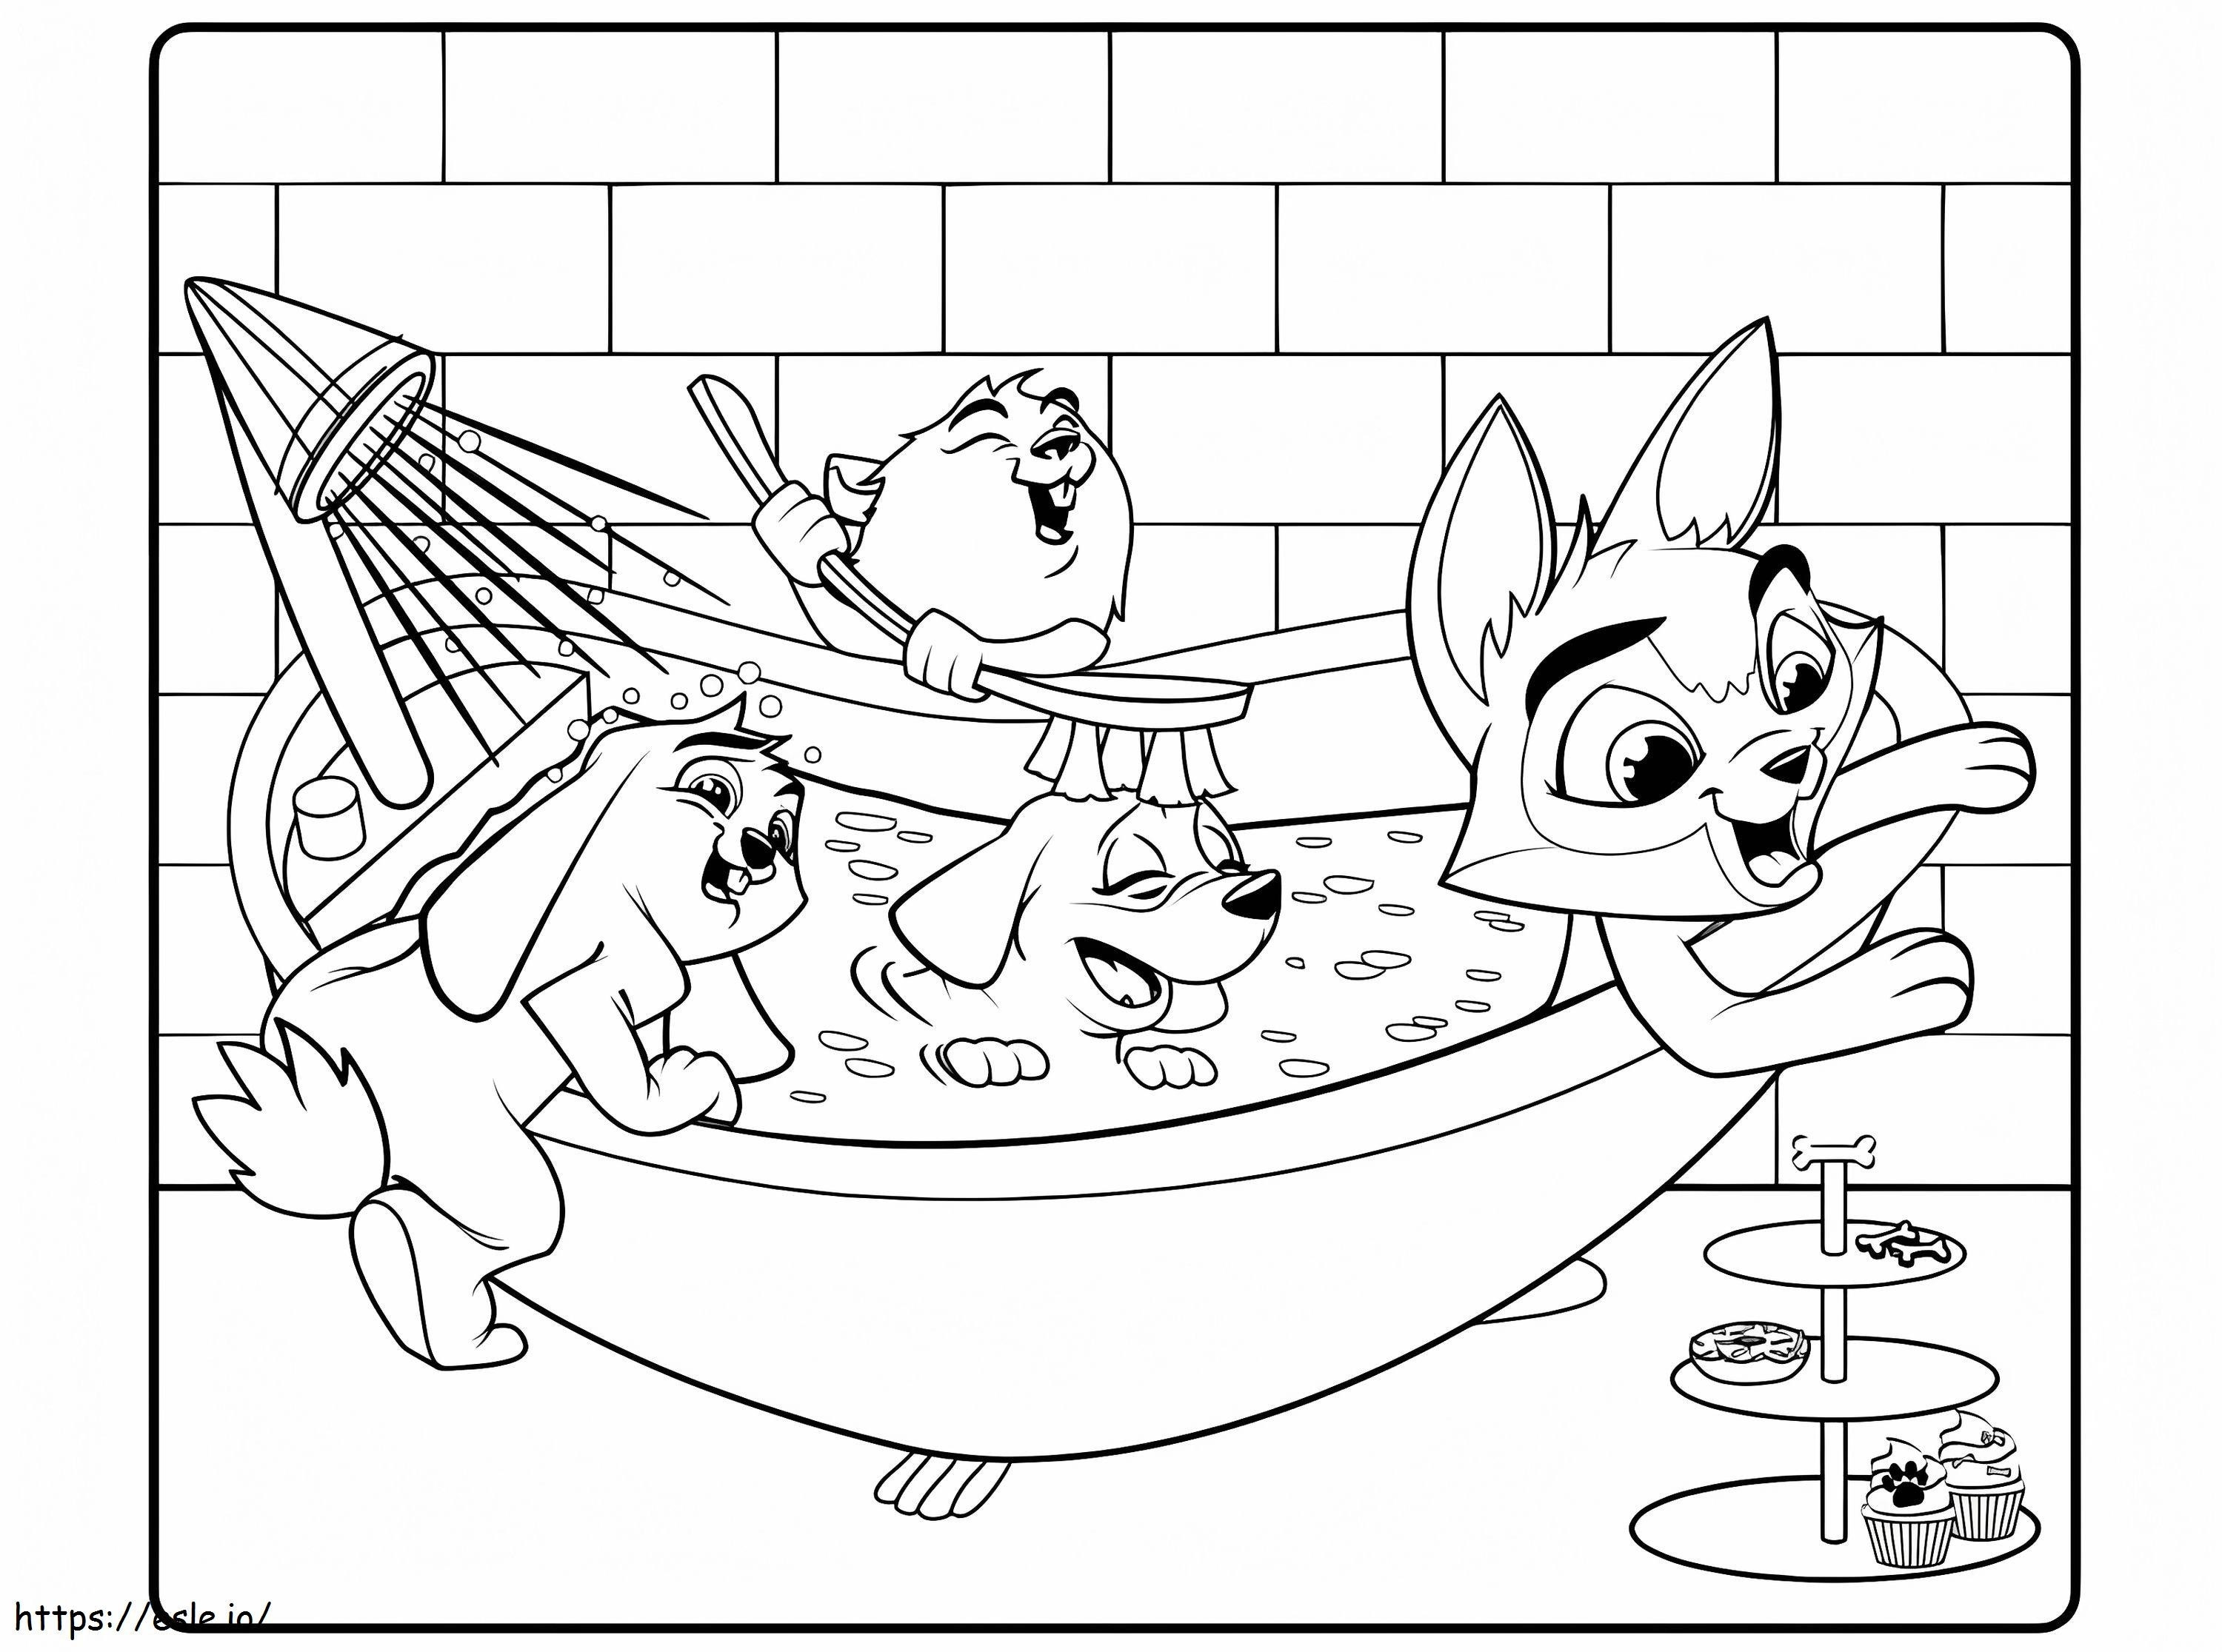 Cute Washimals coloring page